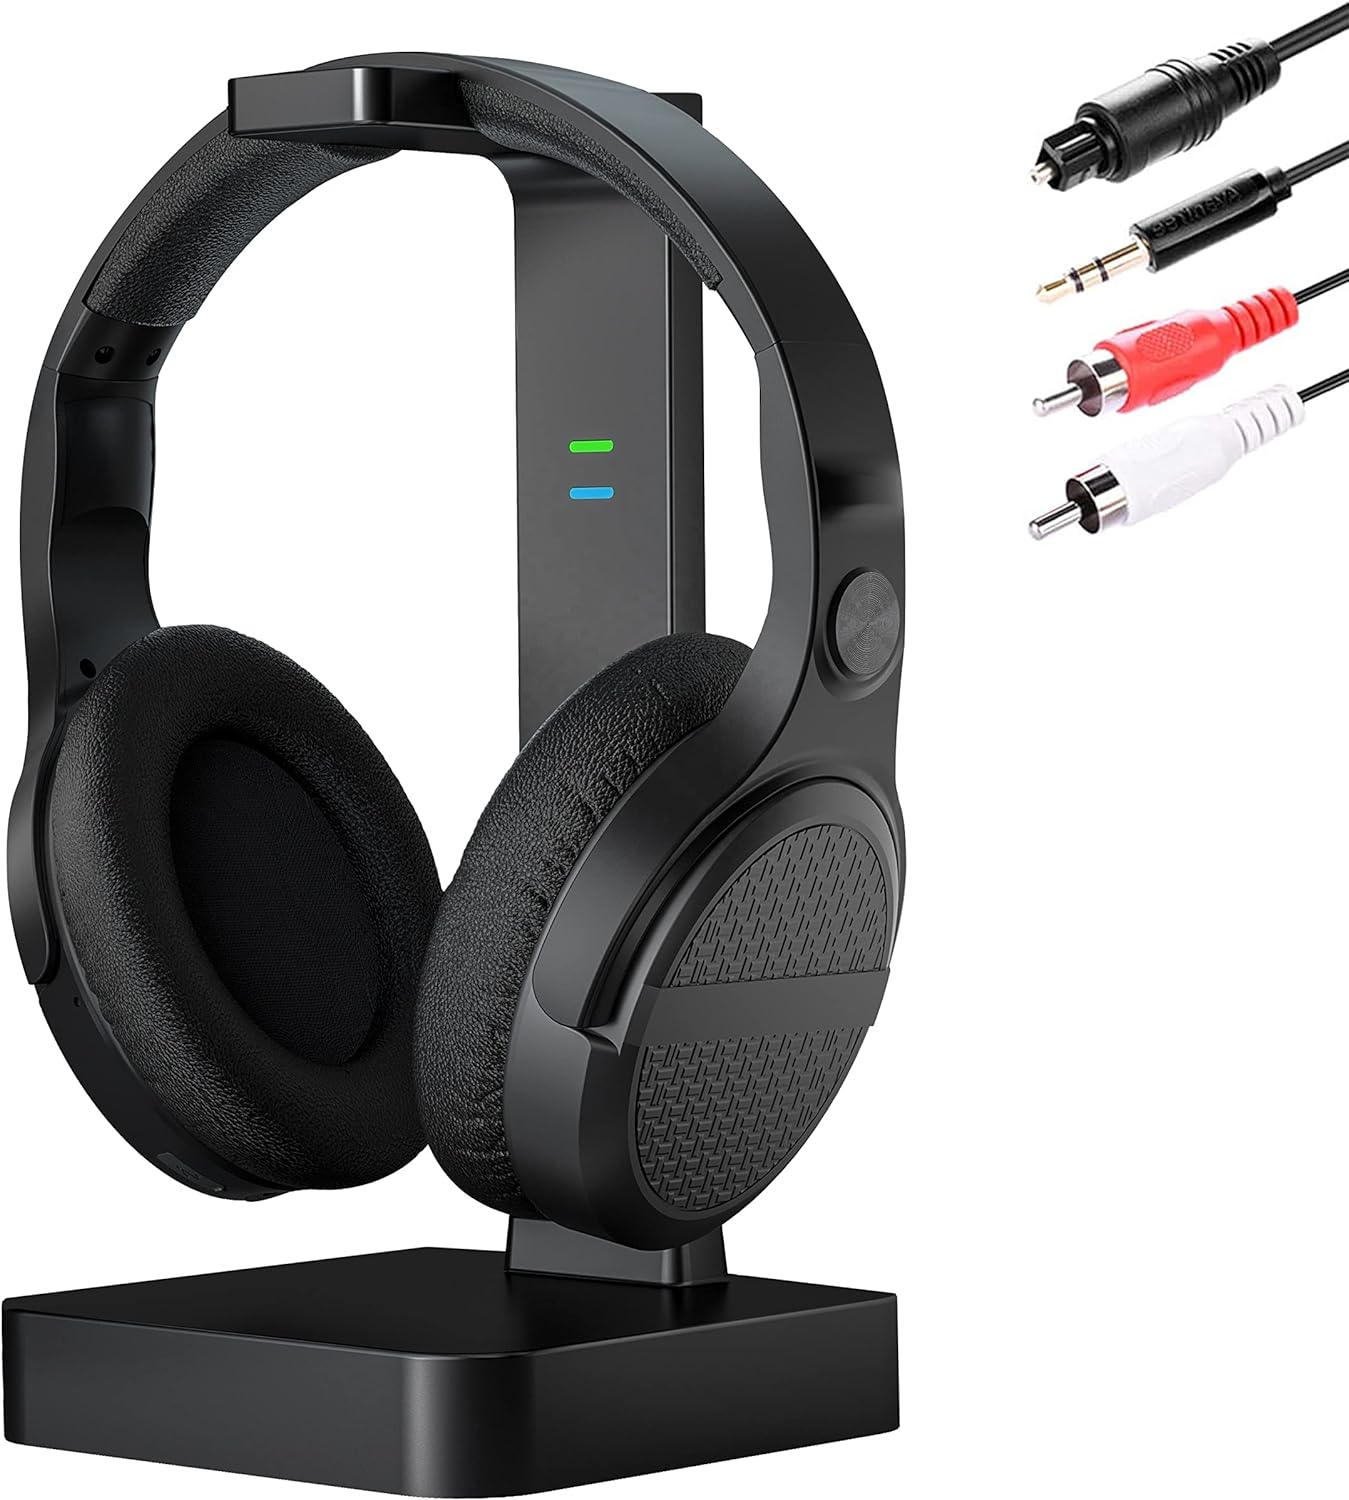 Ansten Wireless Headphones Review: Enhance Your TV Experience